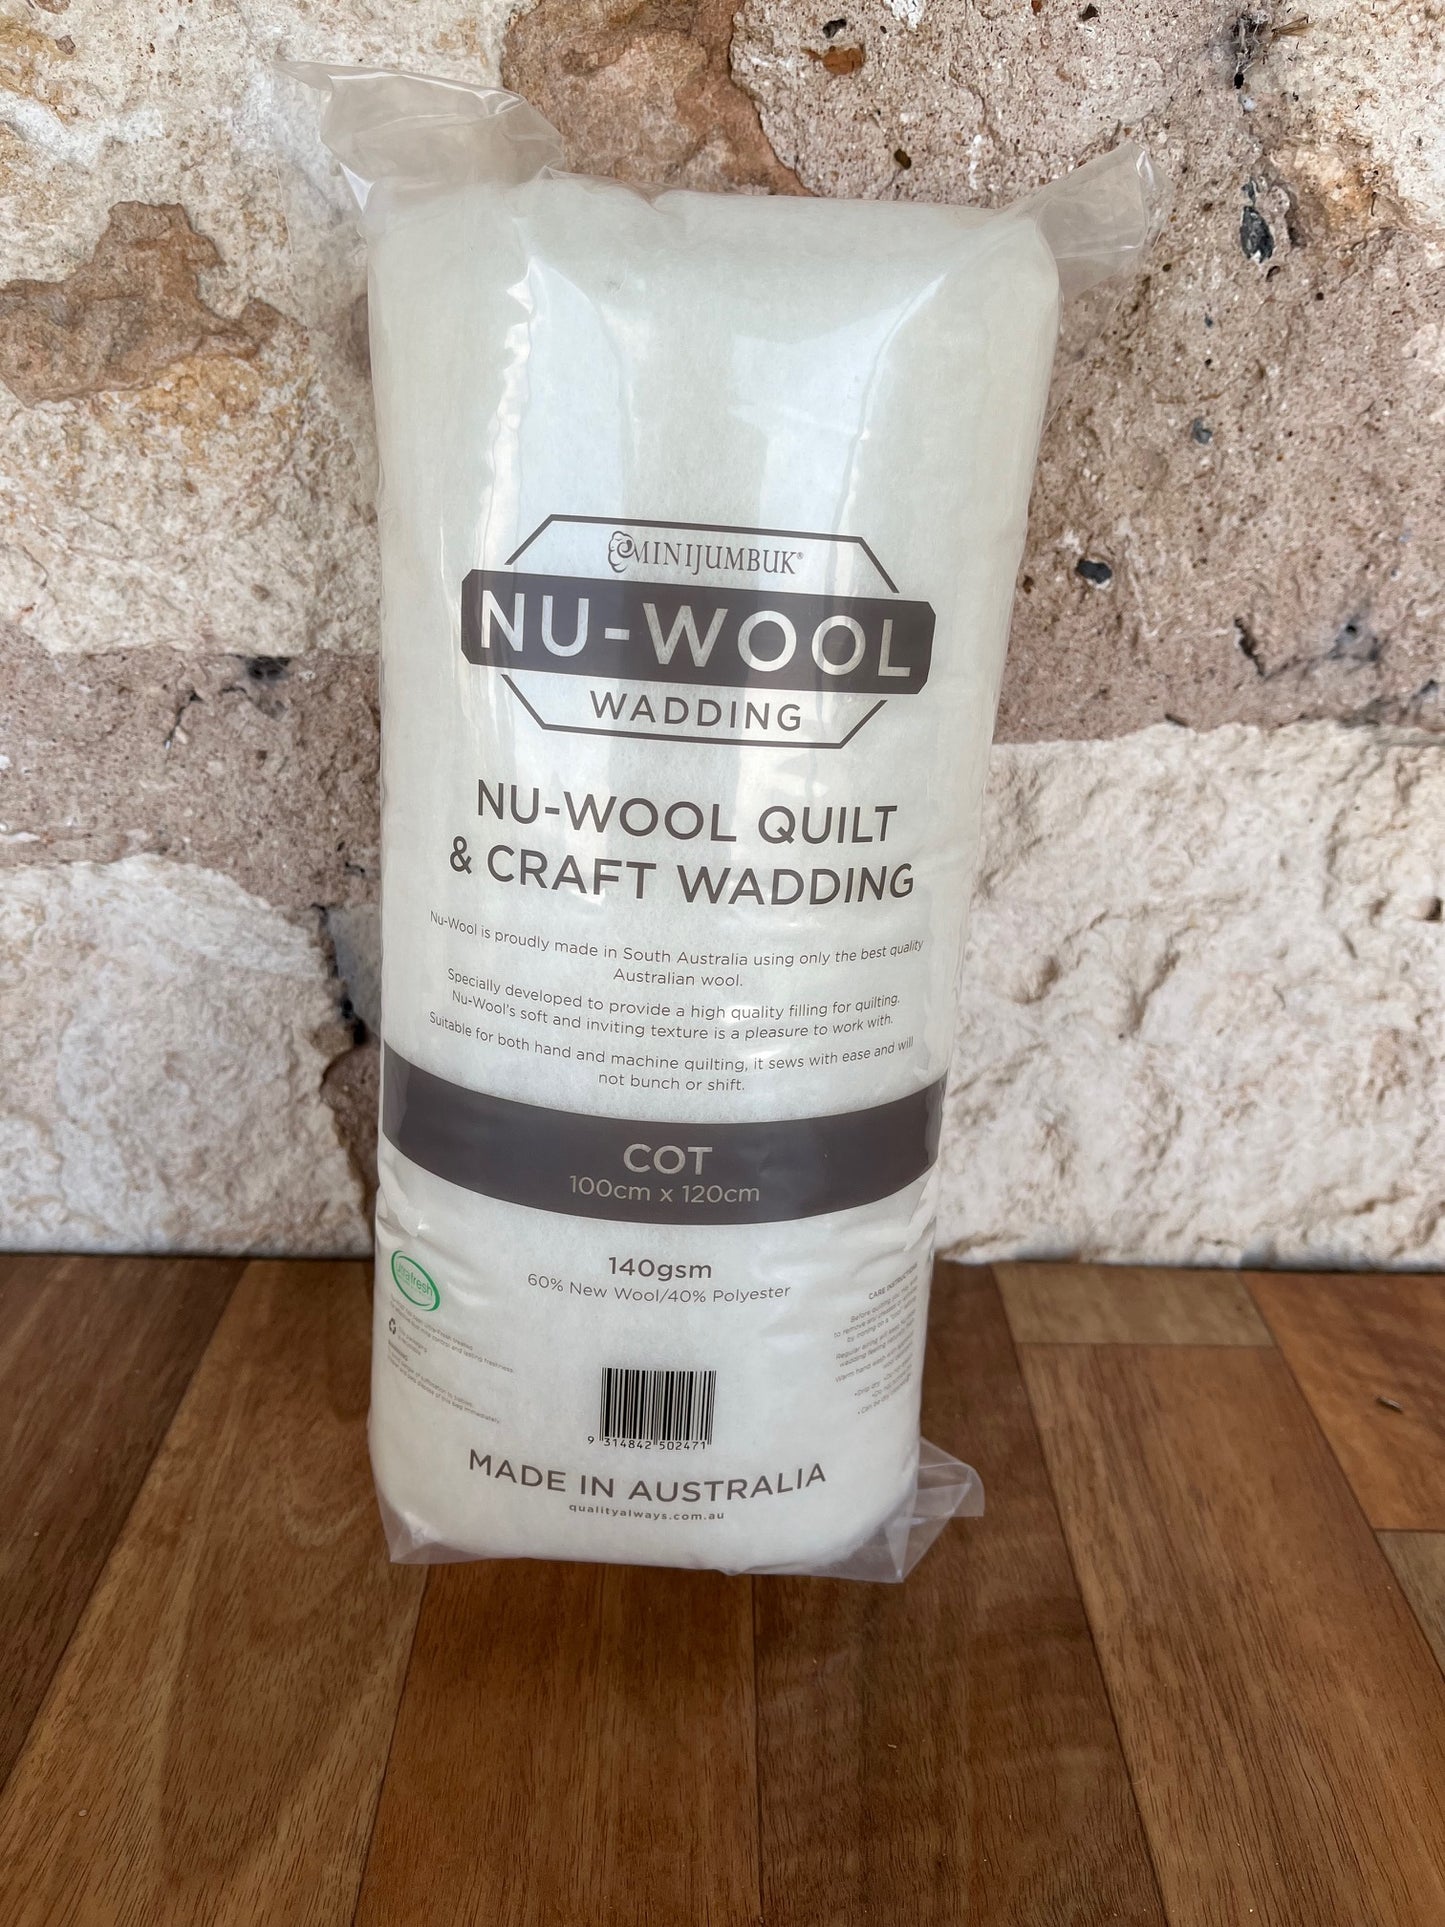 Nu-wool wadding/batting Mini Jumbuk